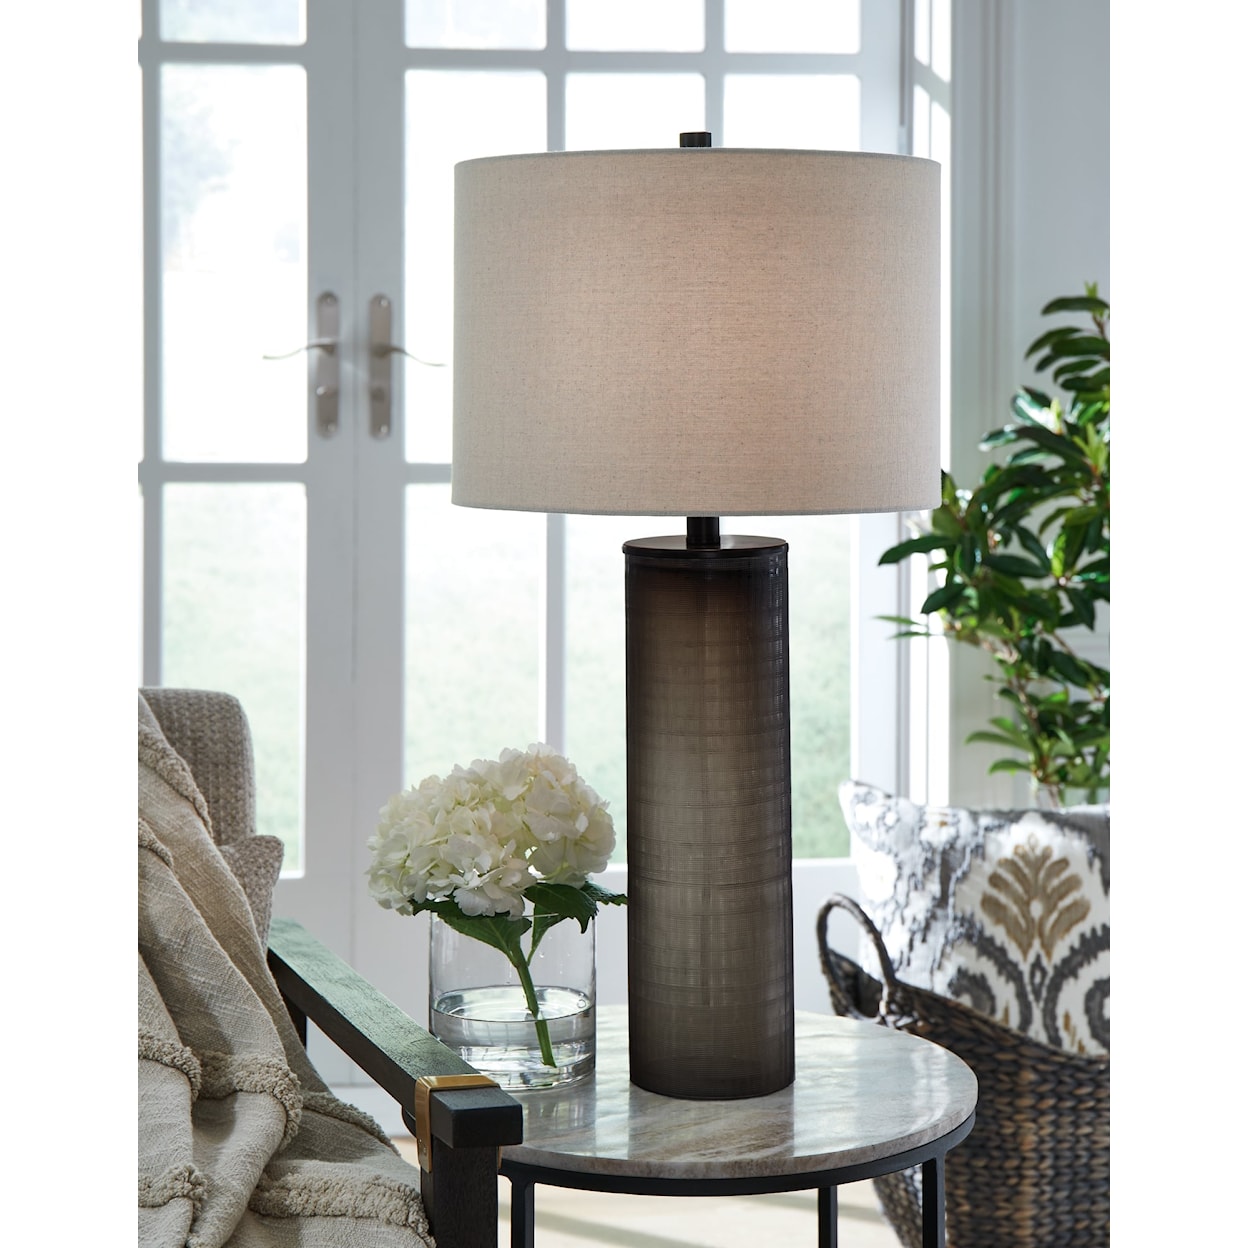 Ashley Furniture Signature Design Dingerly Glass Table Lamp